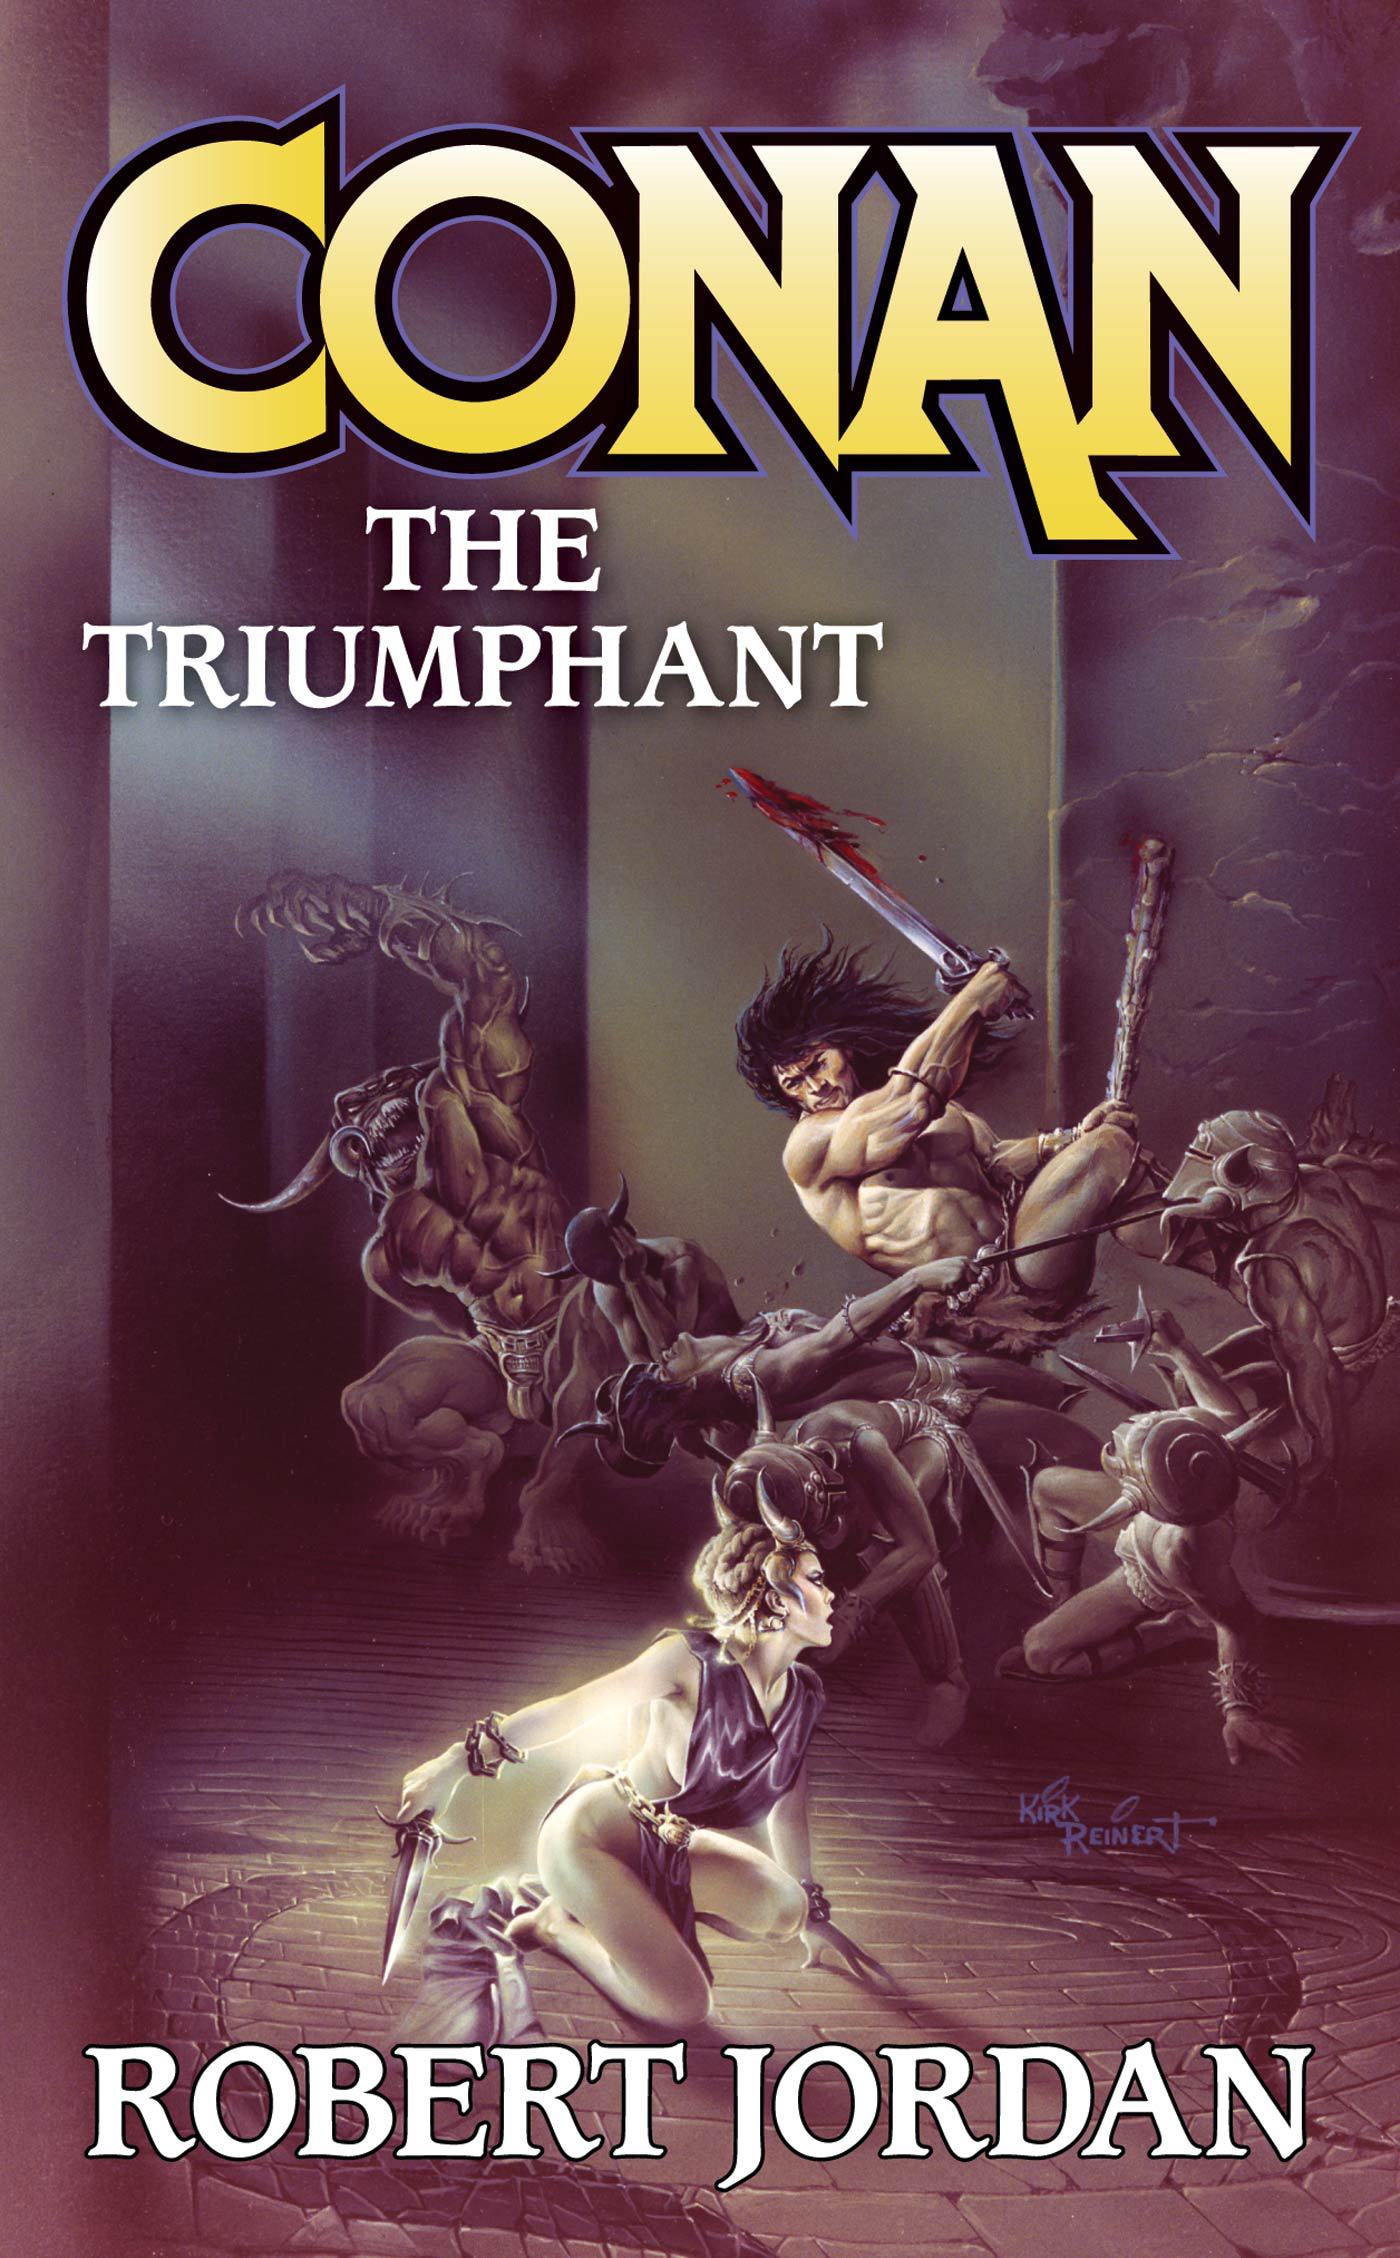 Conan The Triumphant by Robert Jordan